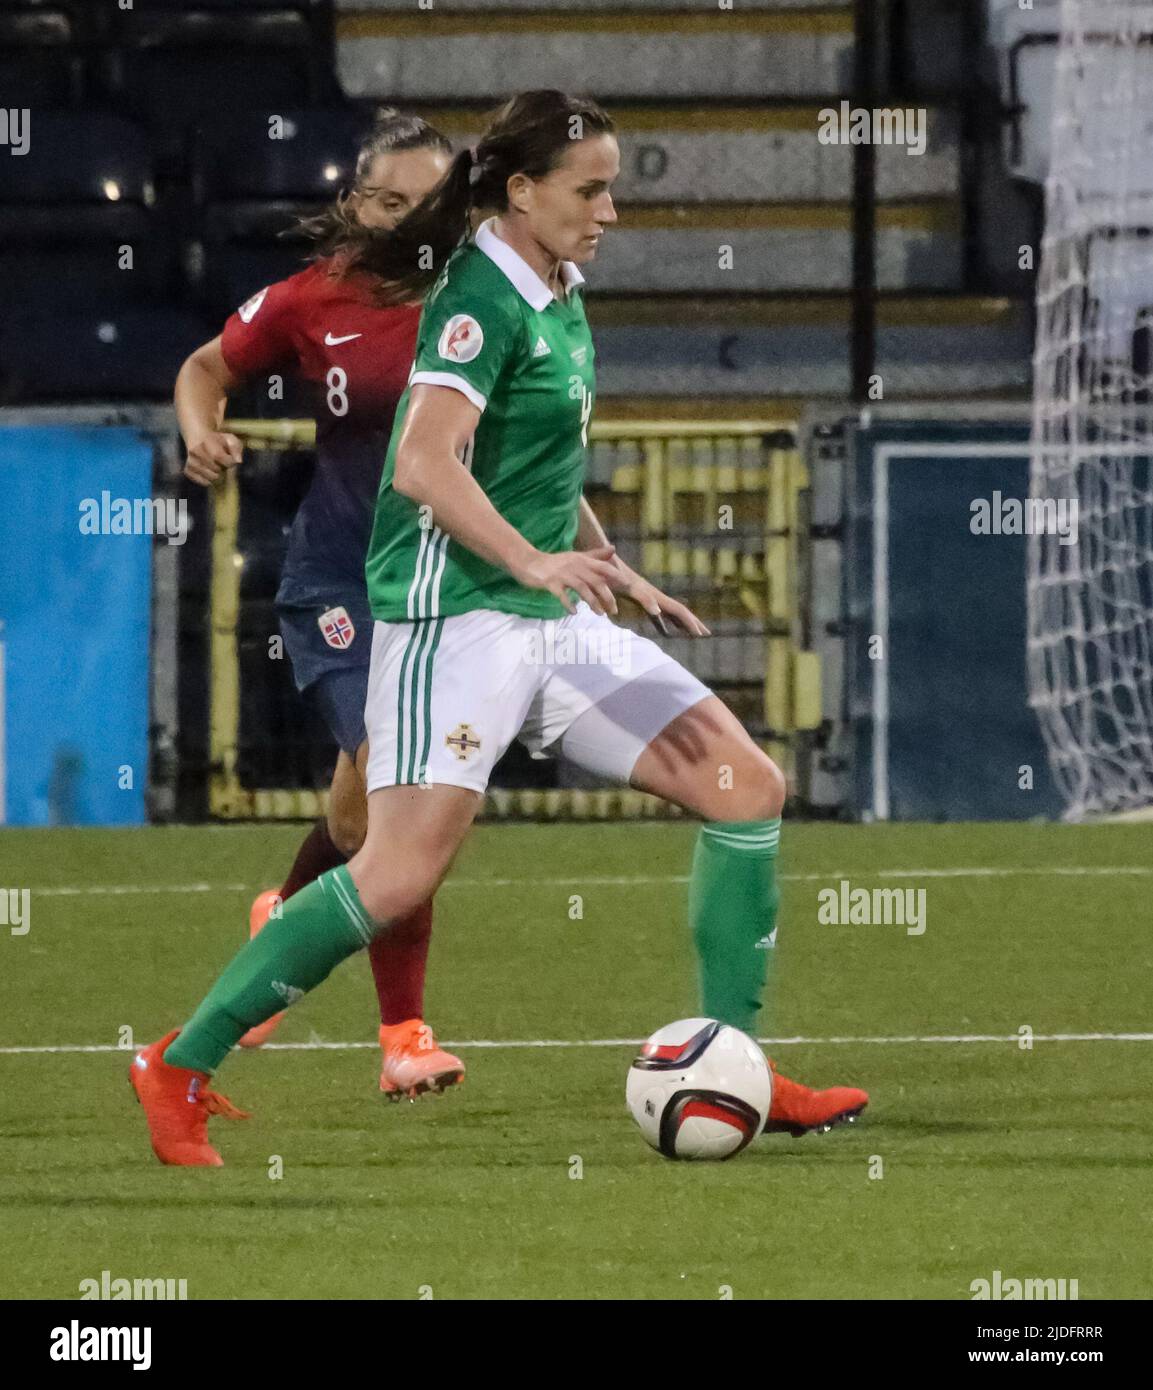 Campeonato Europeo Femenino de la UEFA 2021. 30 de agosto de 2019. Irlanda del Norte 0 Noruega 6 en Seaview, Belfast. La futbolista de la Internacional Femenina de Irlanda del Norte Sarah McFadden Irlanda del Norte (4). Foto de stock